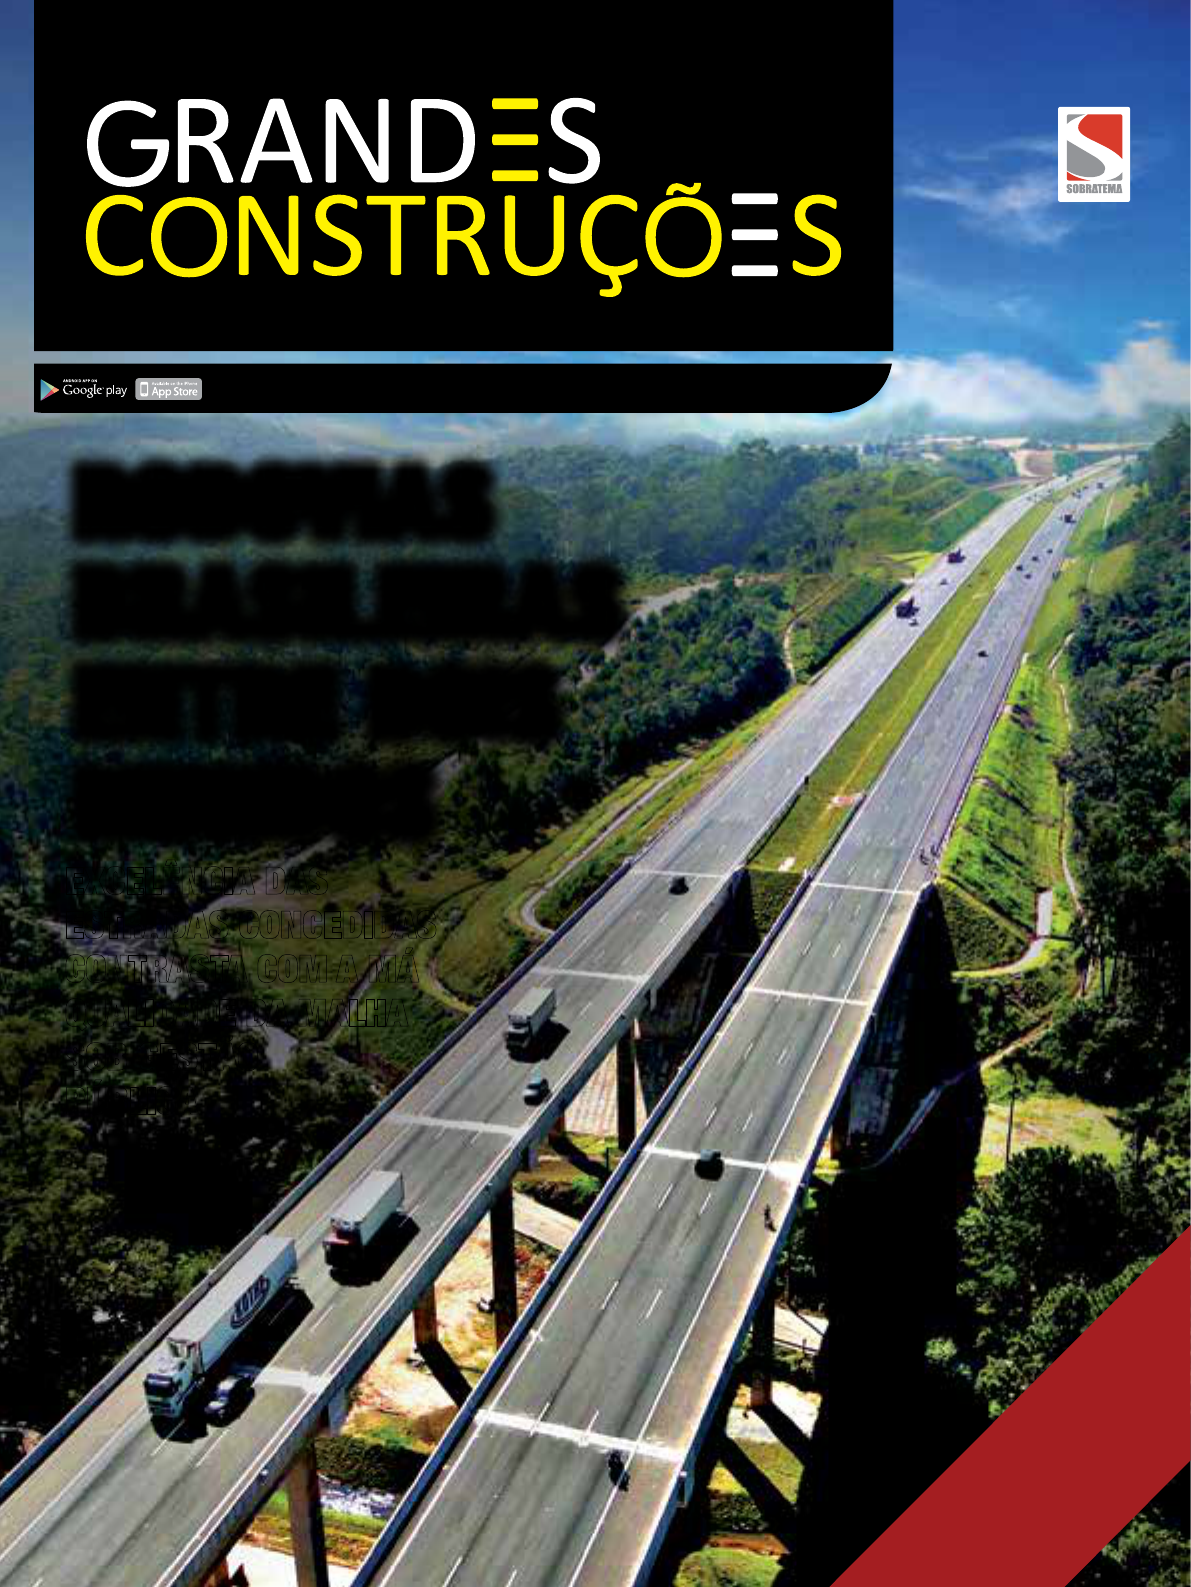 Grandes Construções - Ed. 22 - Dezembro 2011 by Sobratema